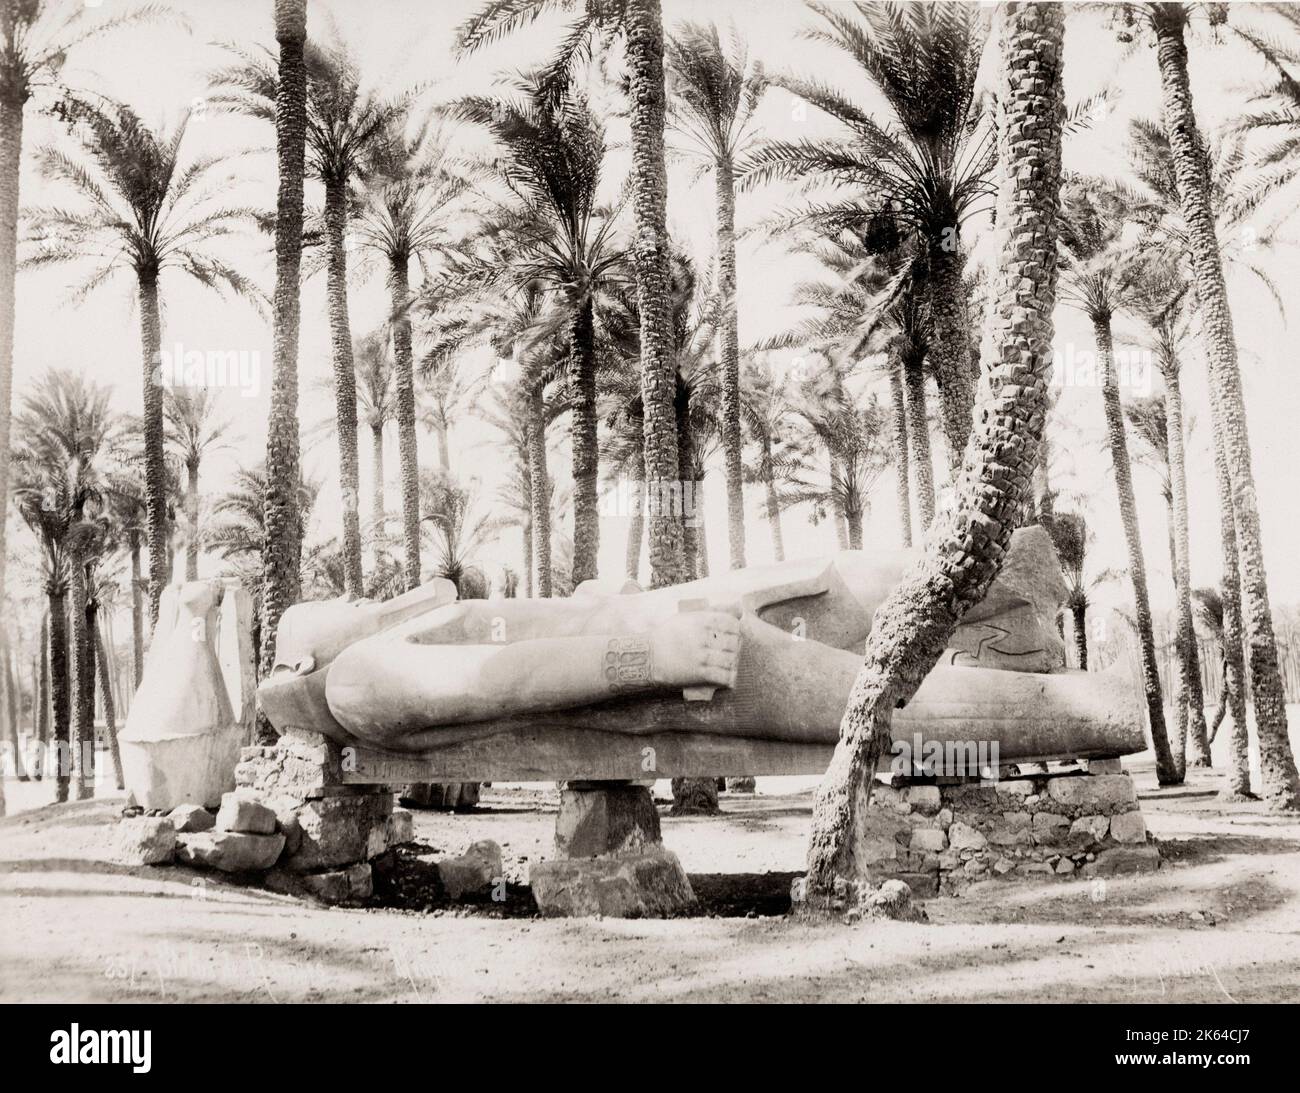 Vintage 19th century photograph - fallen statue of Ramses II at Memphis, Egypt. Stock Photo